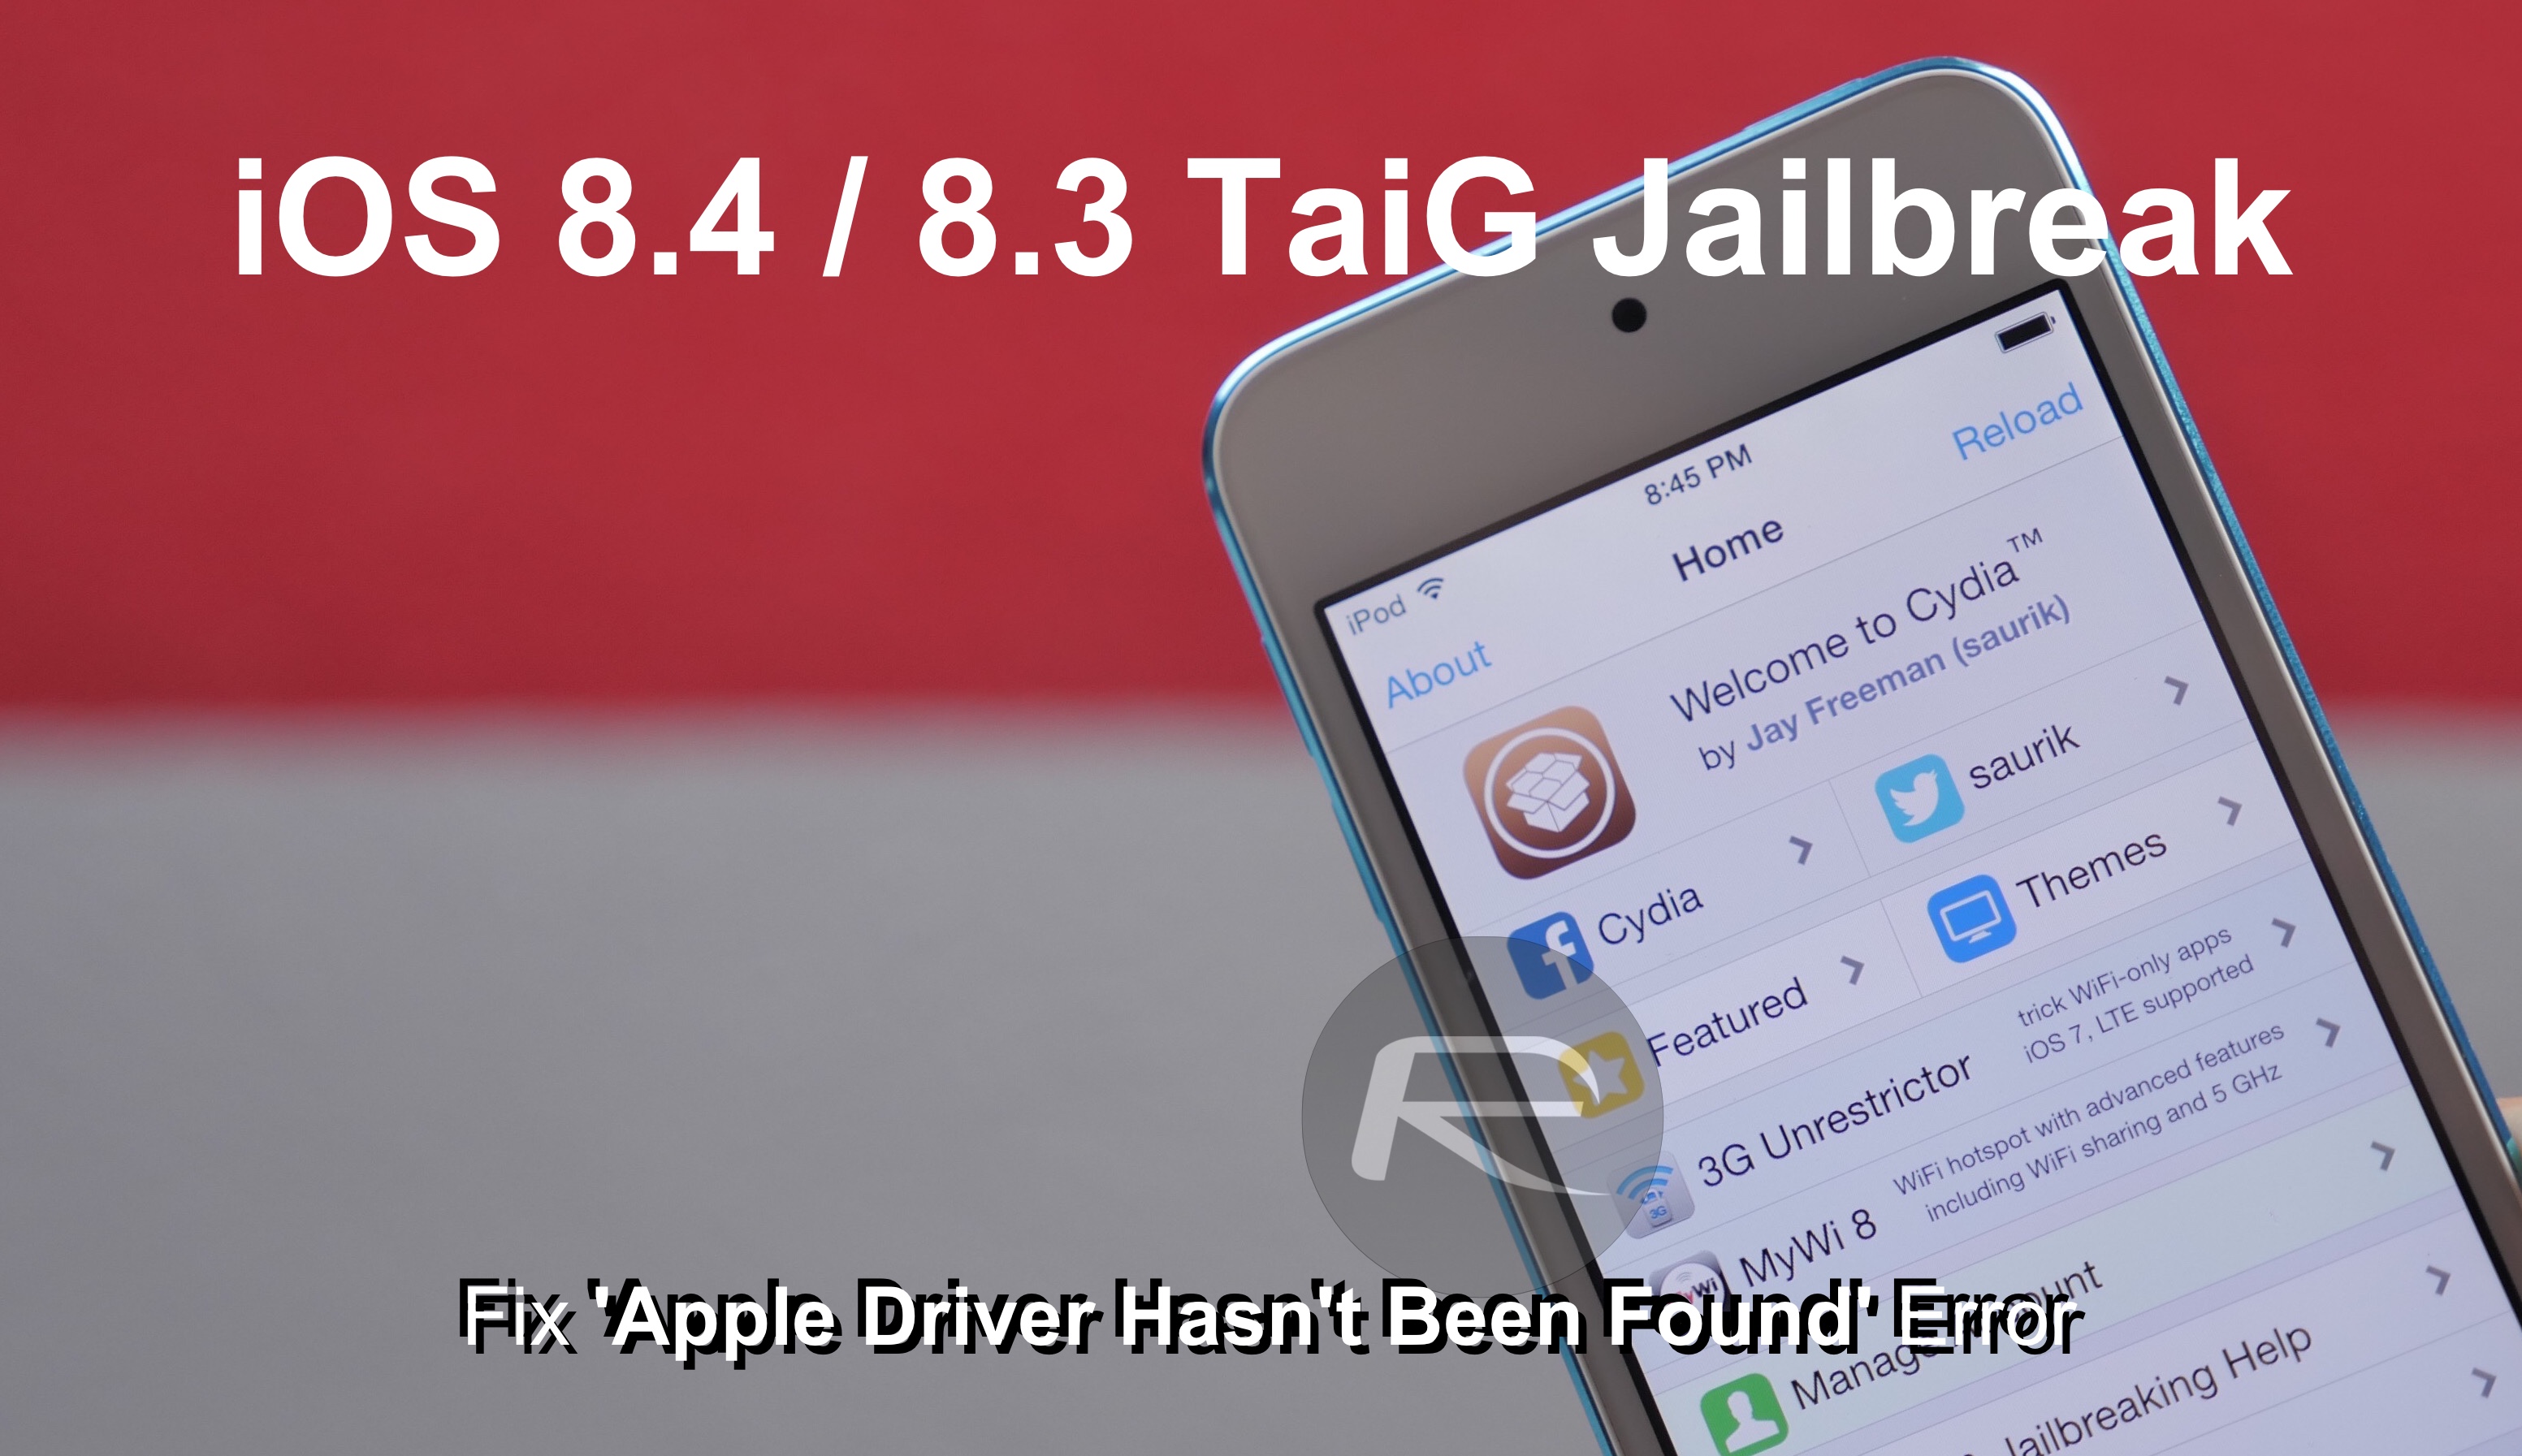 iOS 8.4 8.3 TaiG Jailbreak